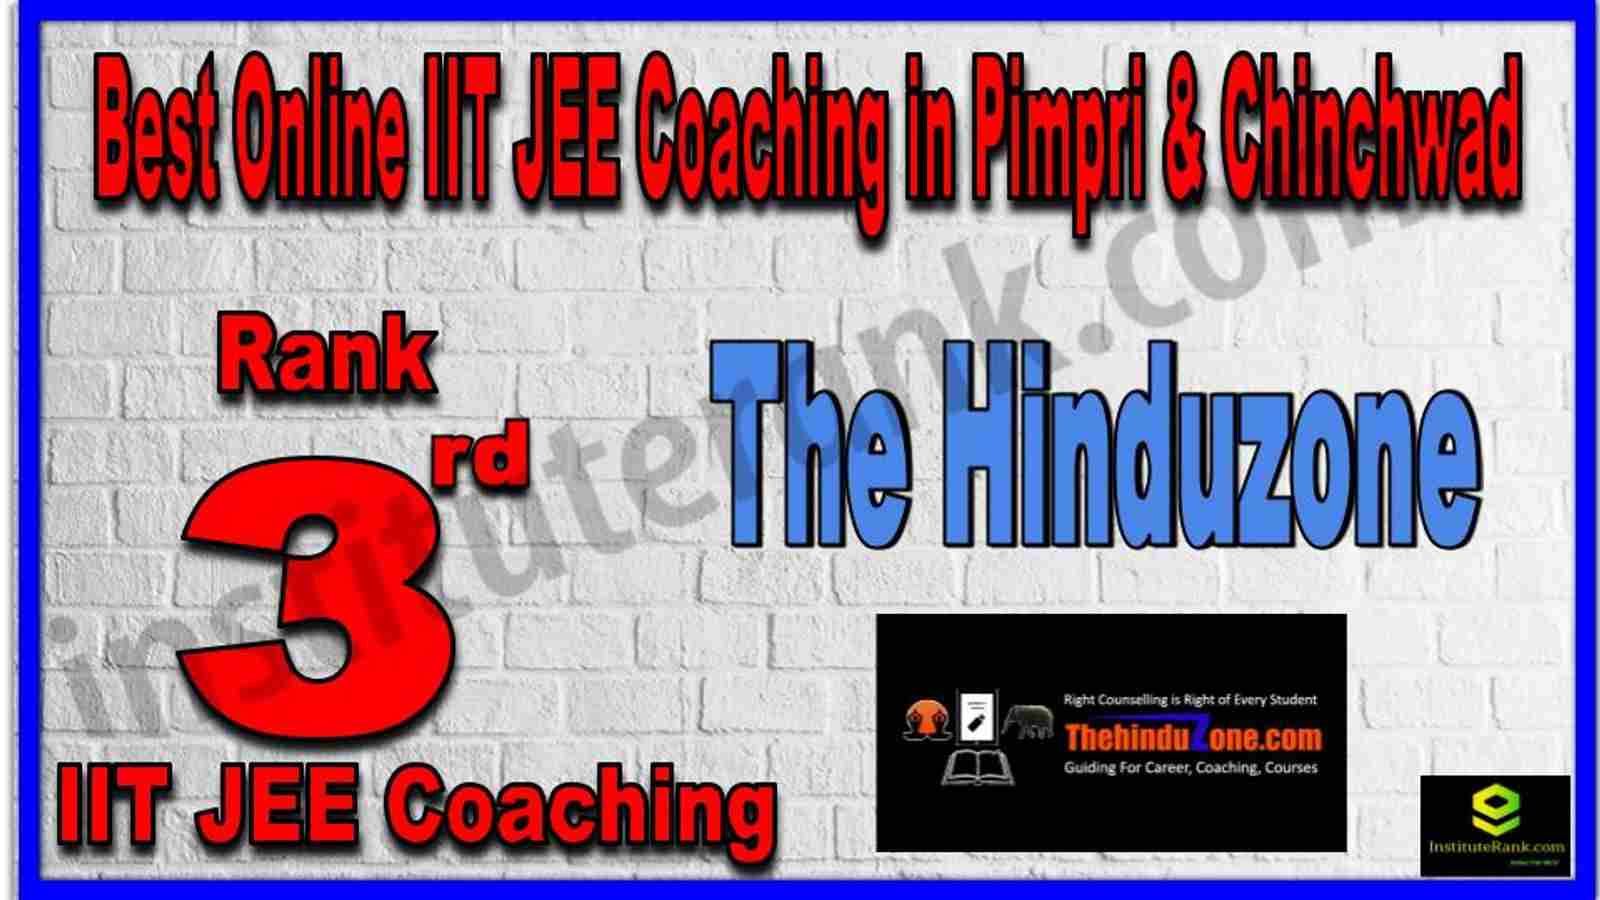 Rank 3rd Best Online IIT JEE Coaching in Pimpri & Chinchwad